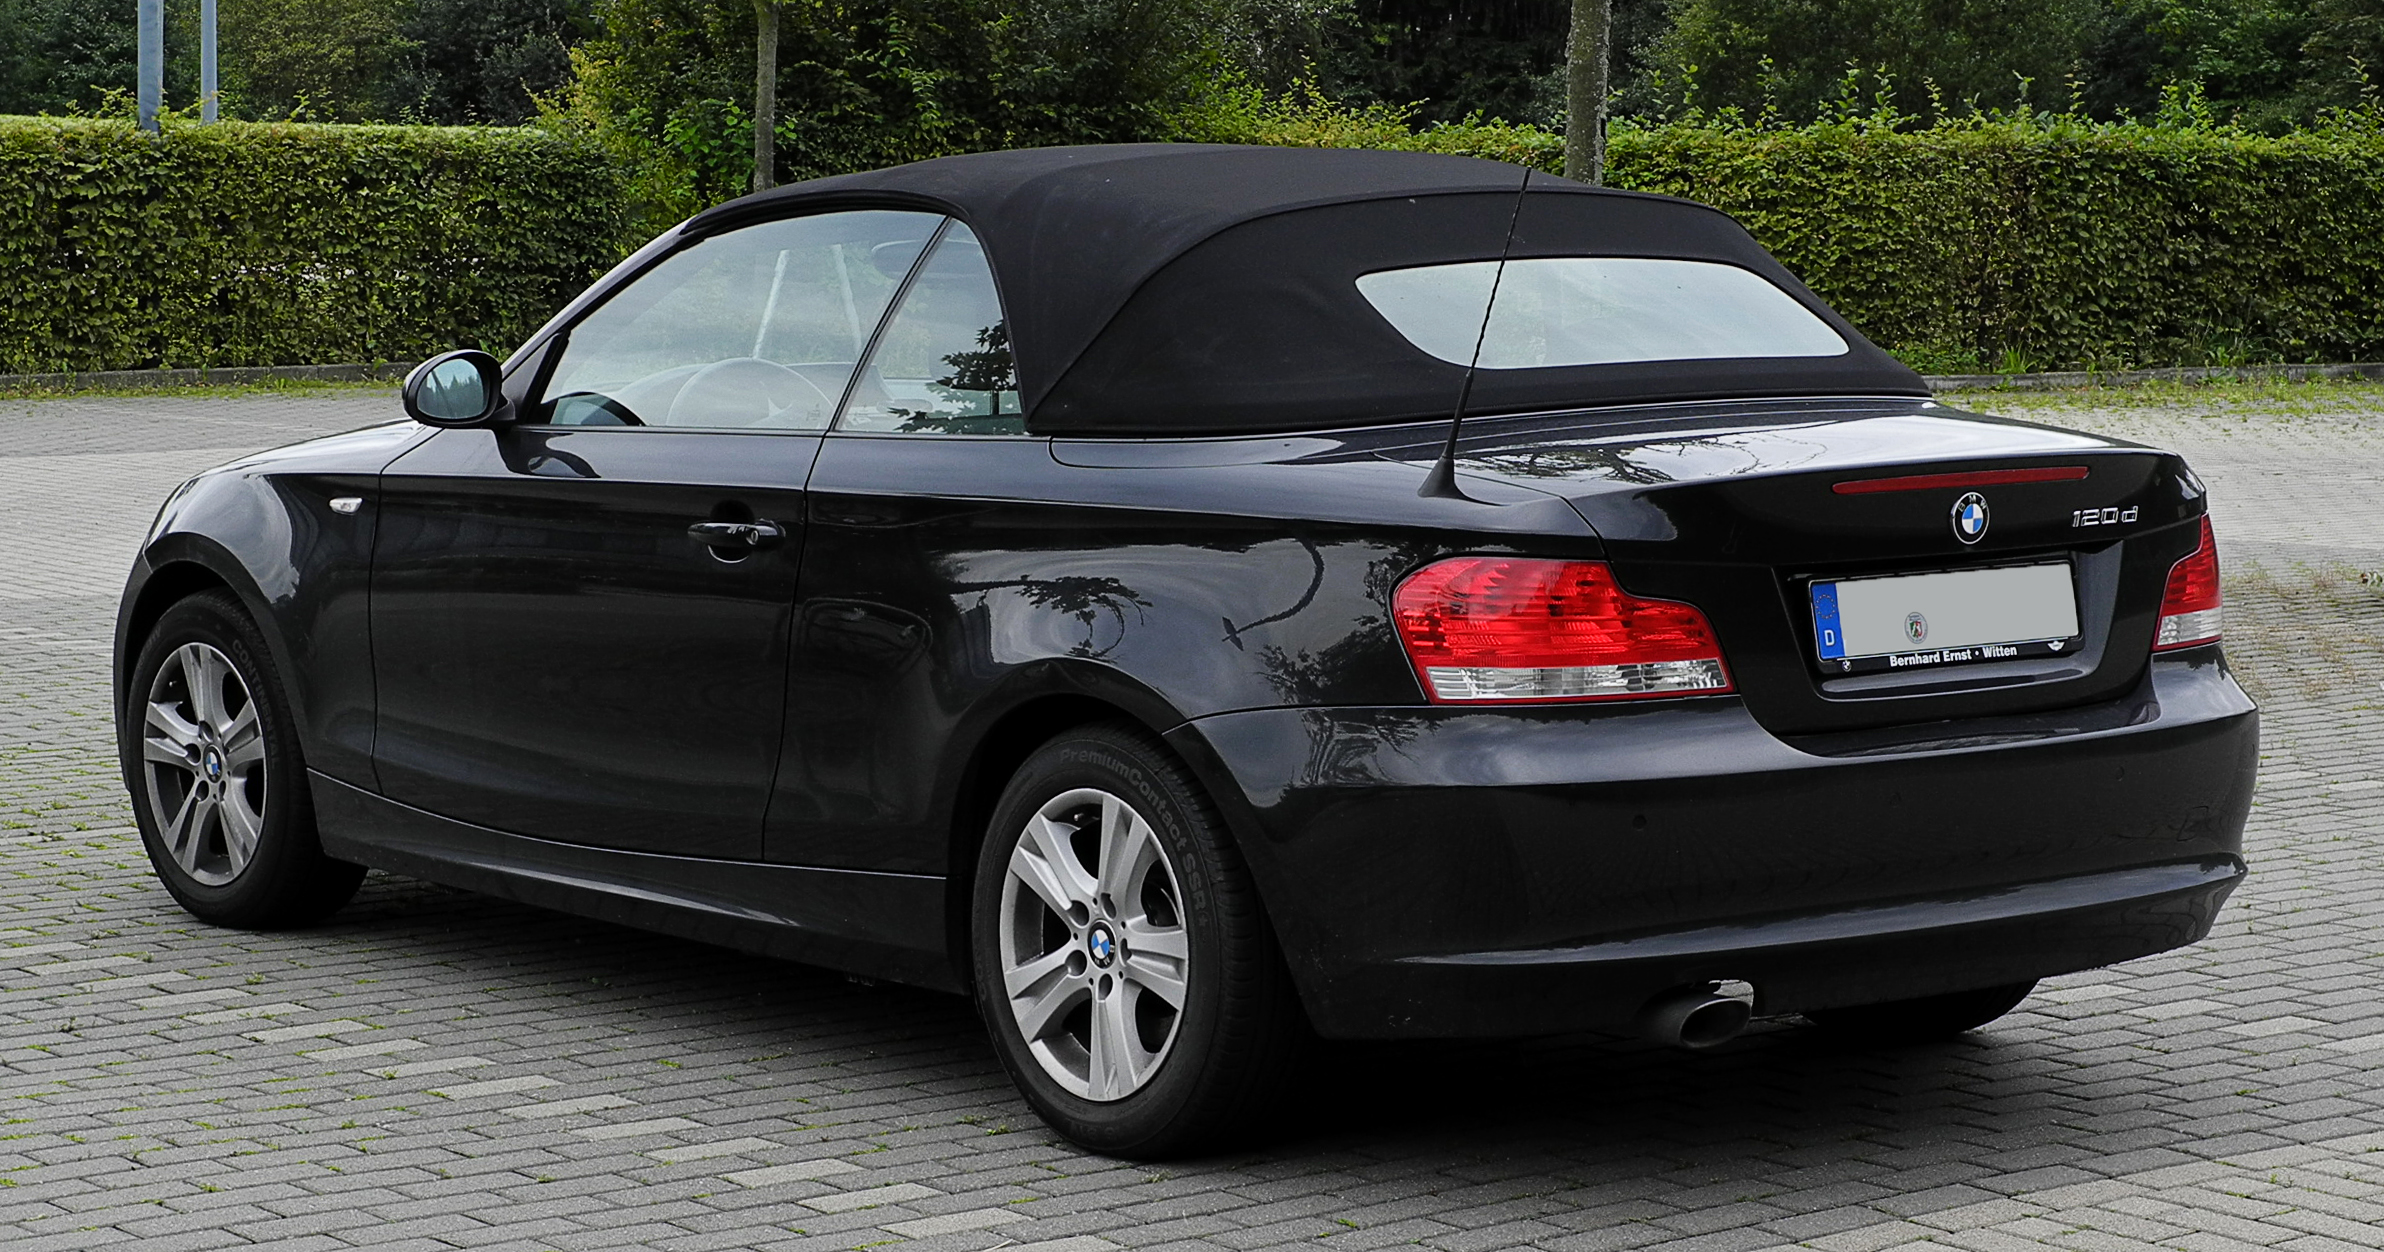 File:BMW 118d (E87) Facelift rear 20100711.jpg - Wikimedia Commons